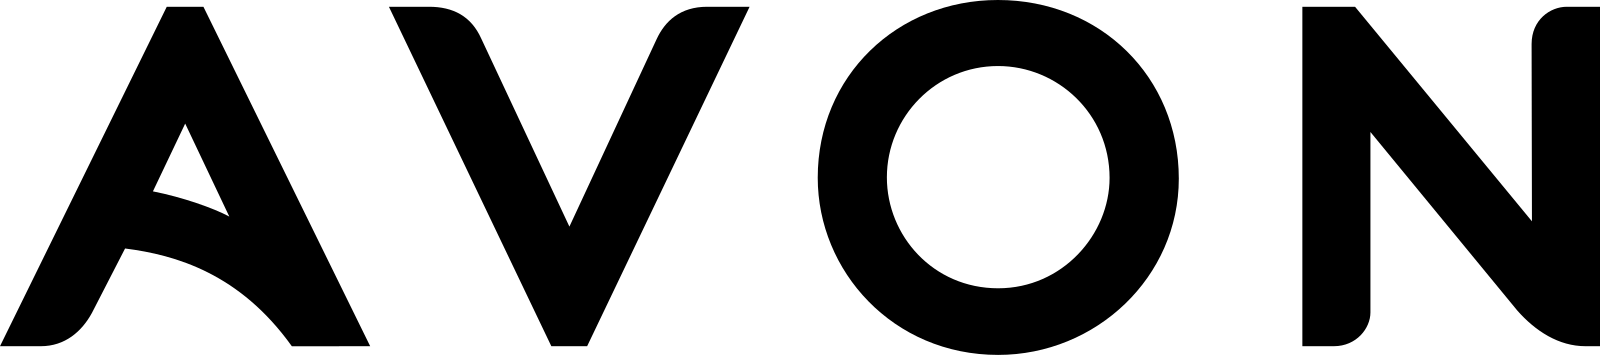 Avon Business Logo 2020 Black